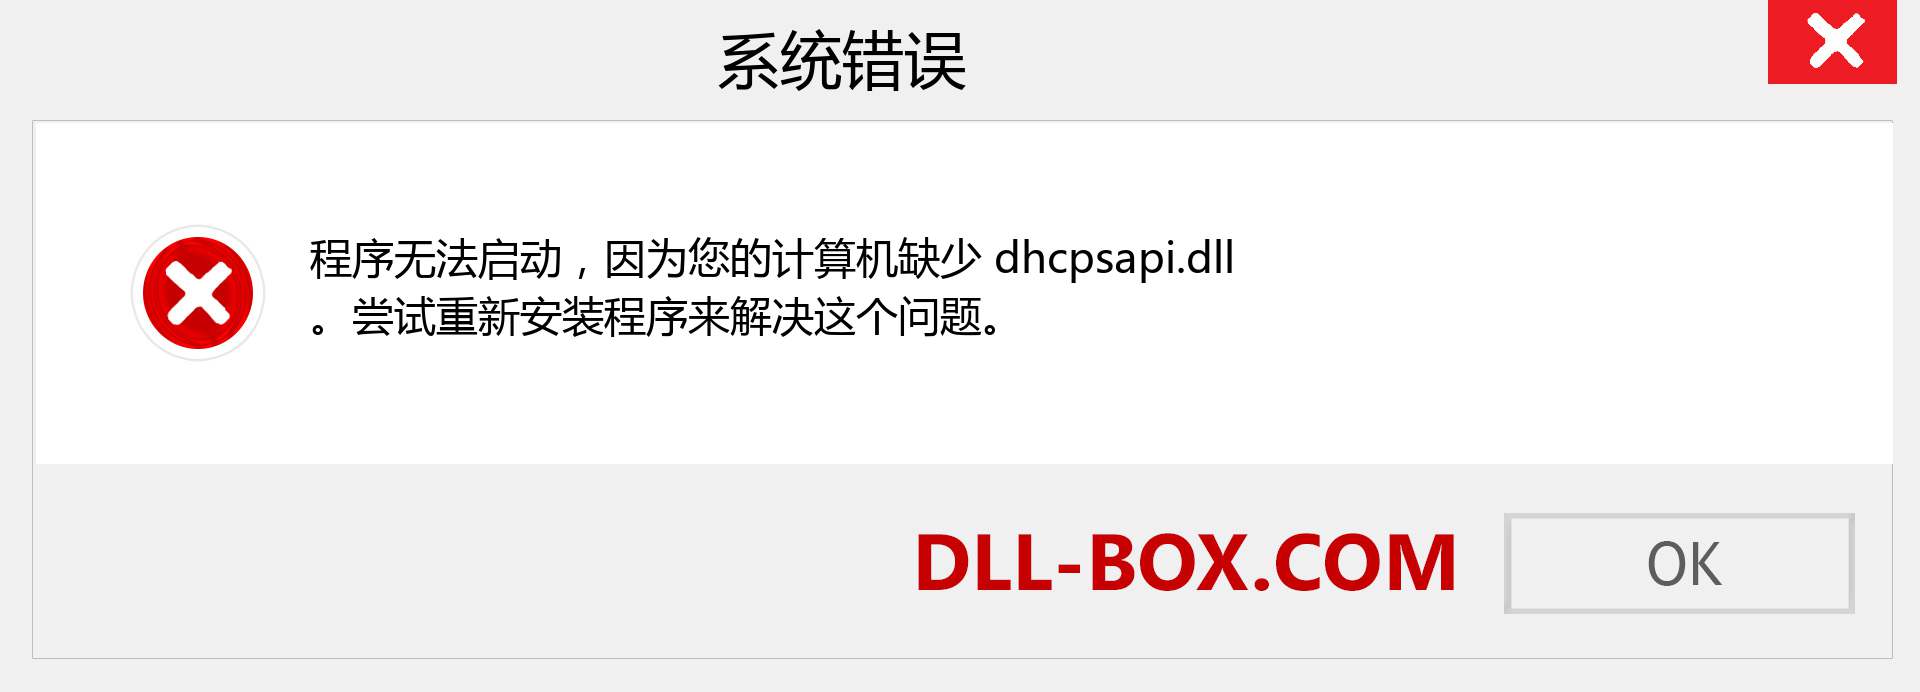 dhcpsapi.dll 文件丢失？。 适用于 Windows 7、8、10 的下载 - 修复 Windows、照片、图像上的 dhcpsapi dll 丢失错误